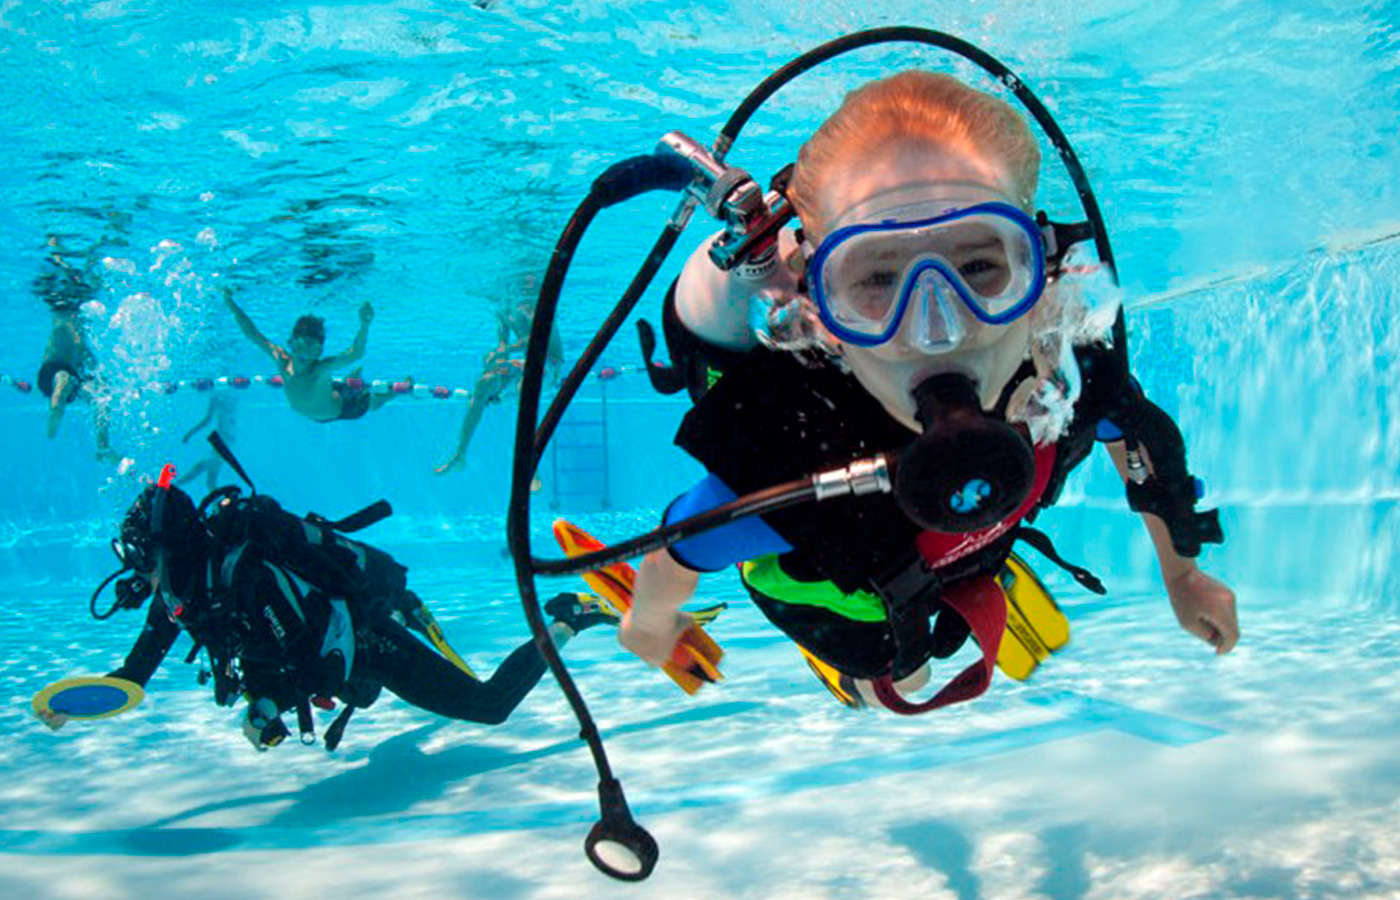 Underwater adventure for kids with sea turtles